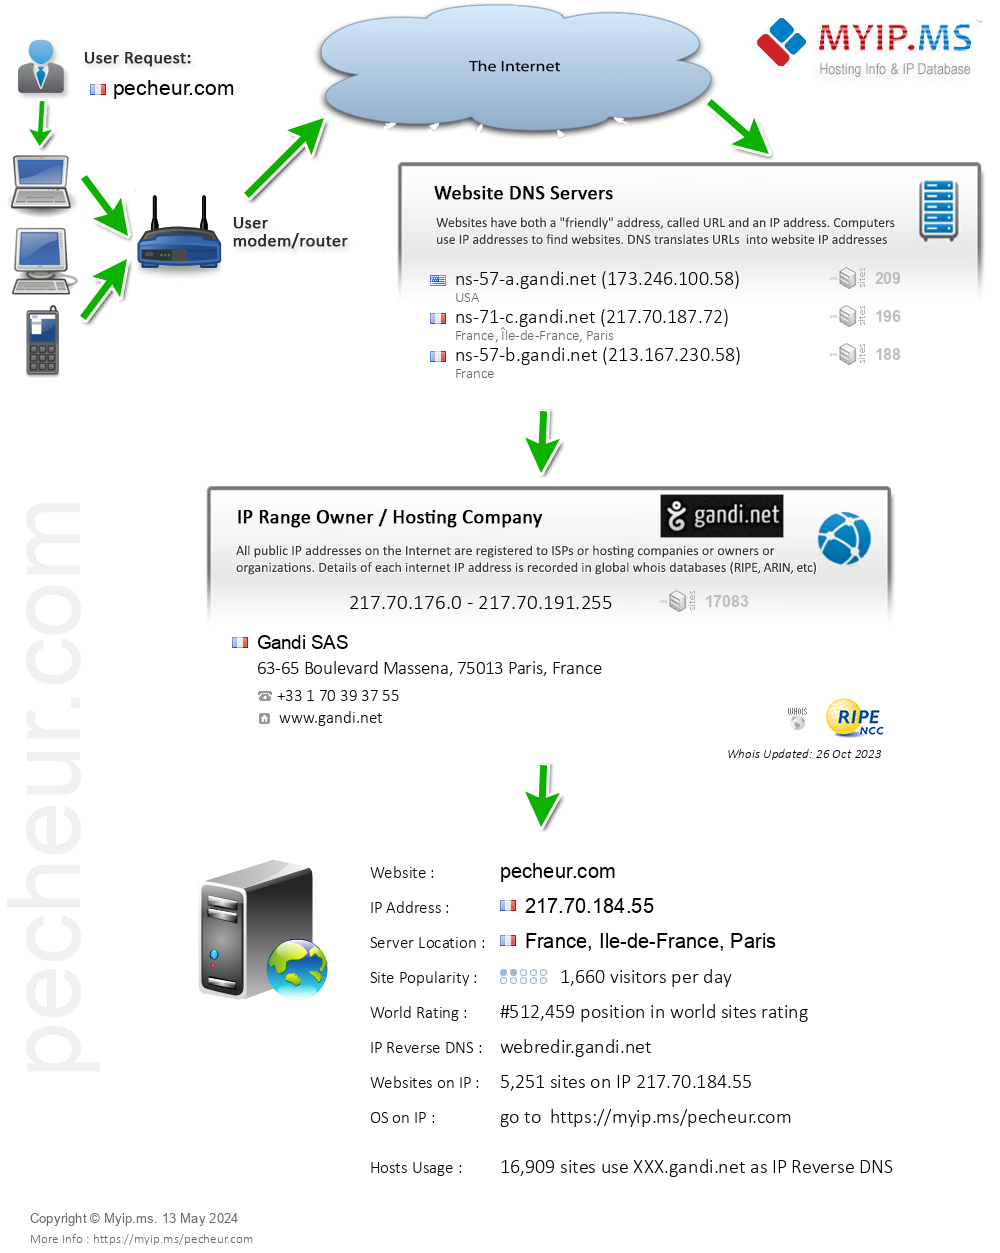 Pecheur.com - Website Hosting Visual IP Diagram